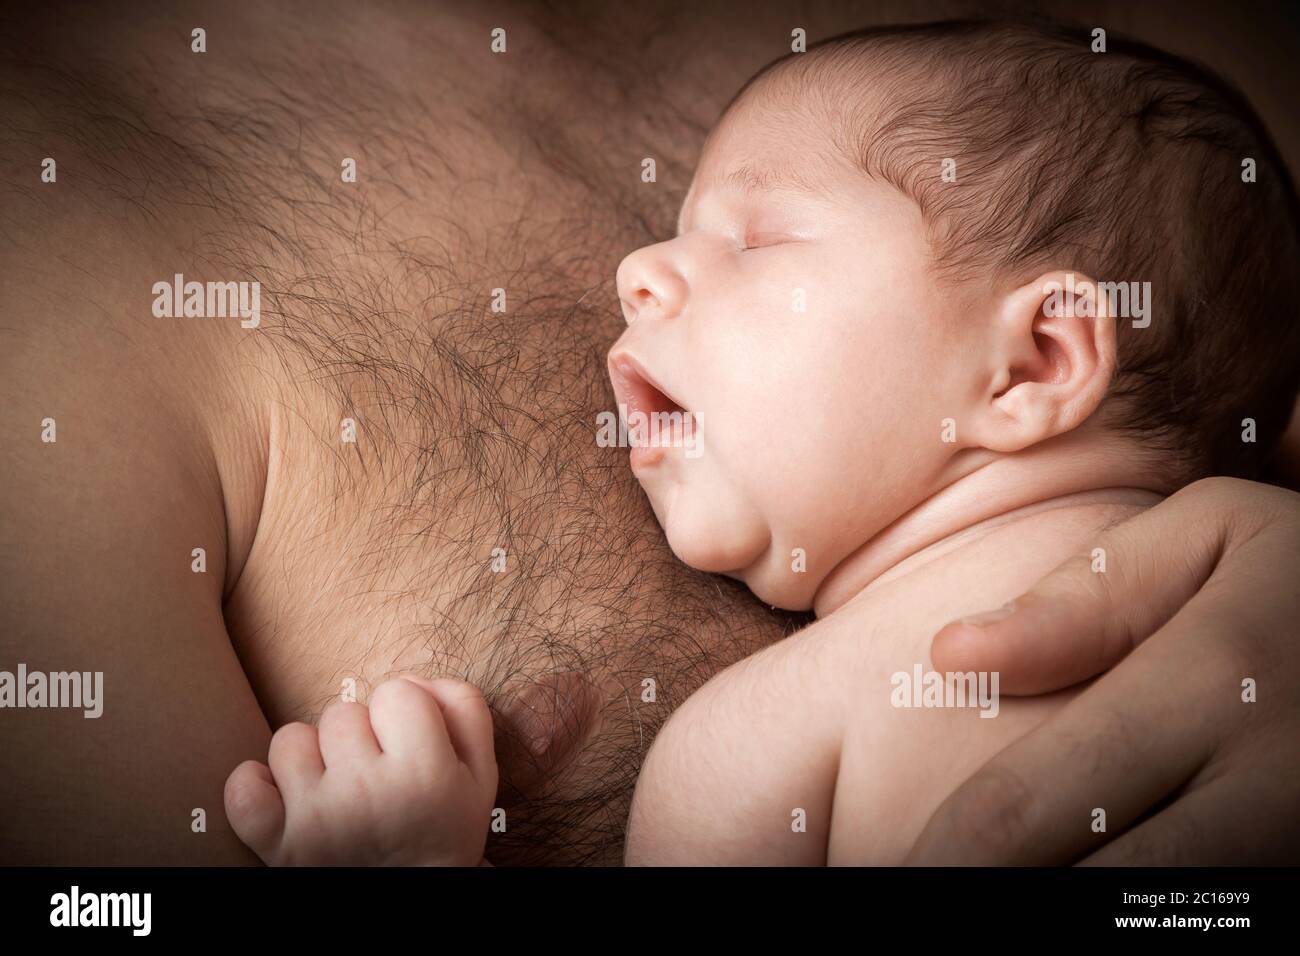 newborn child and father Stock Photo